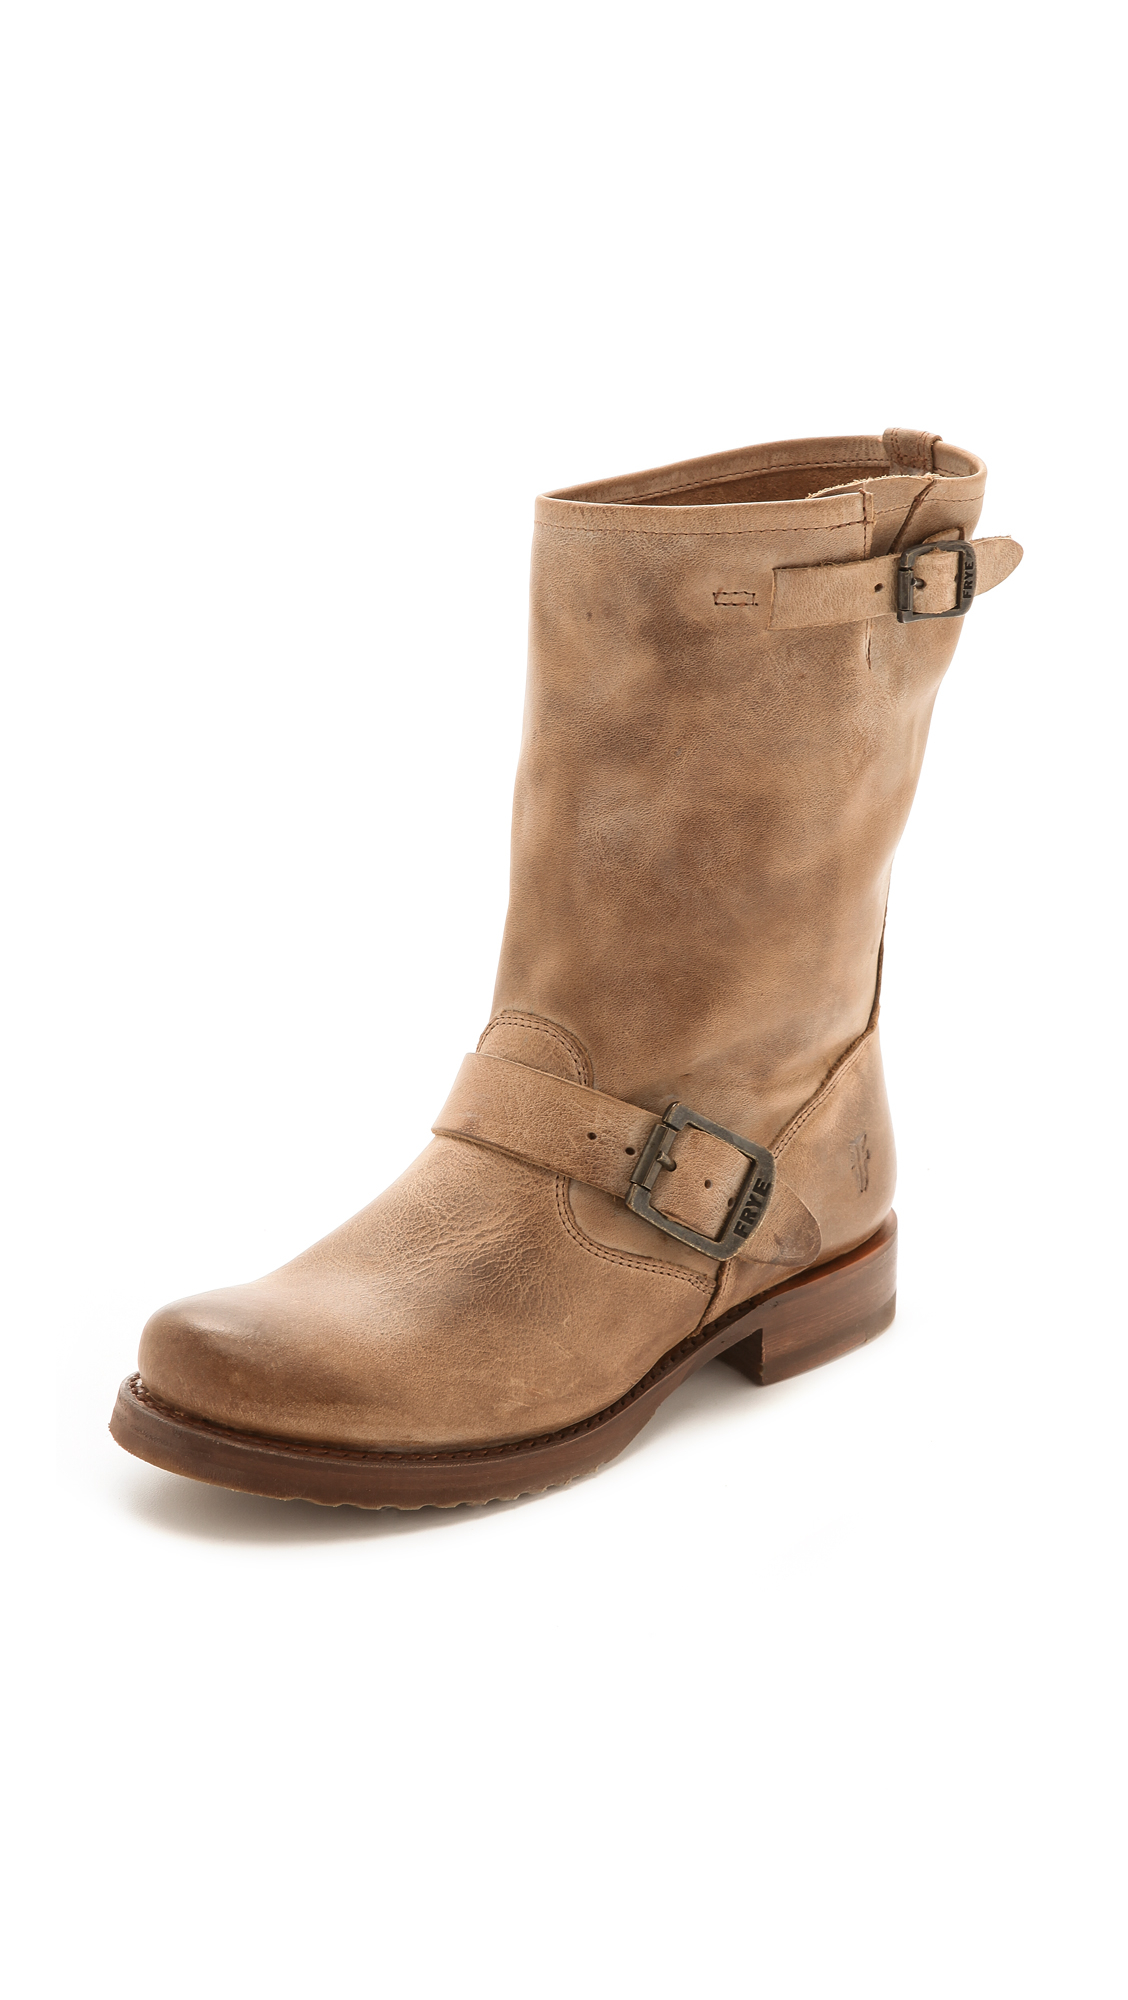 Frye Veronica Short Boots - Tan in Brown | Lyst1128 x 2000